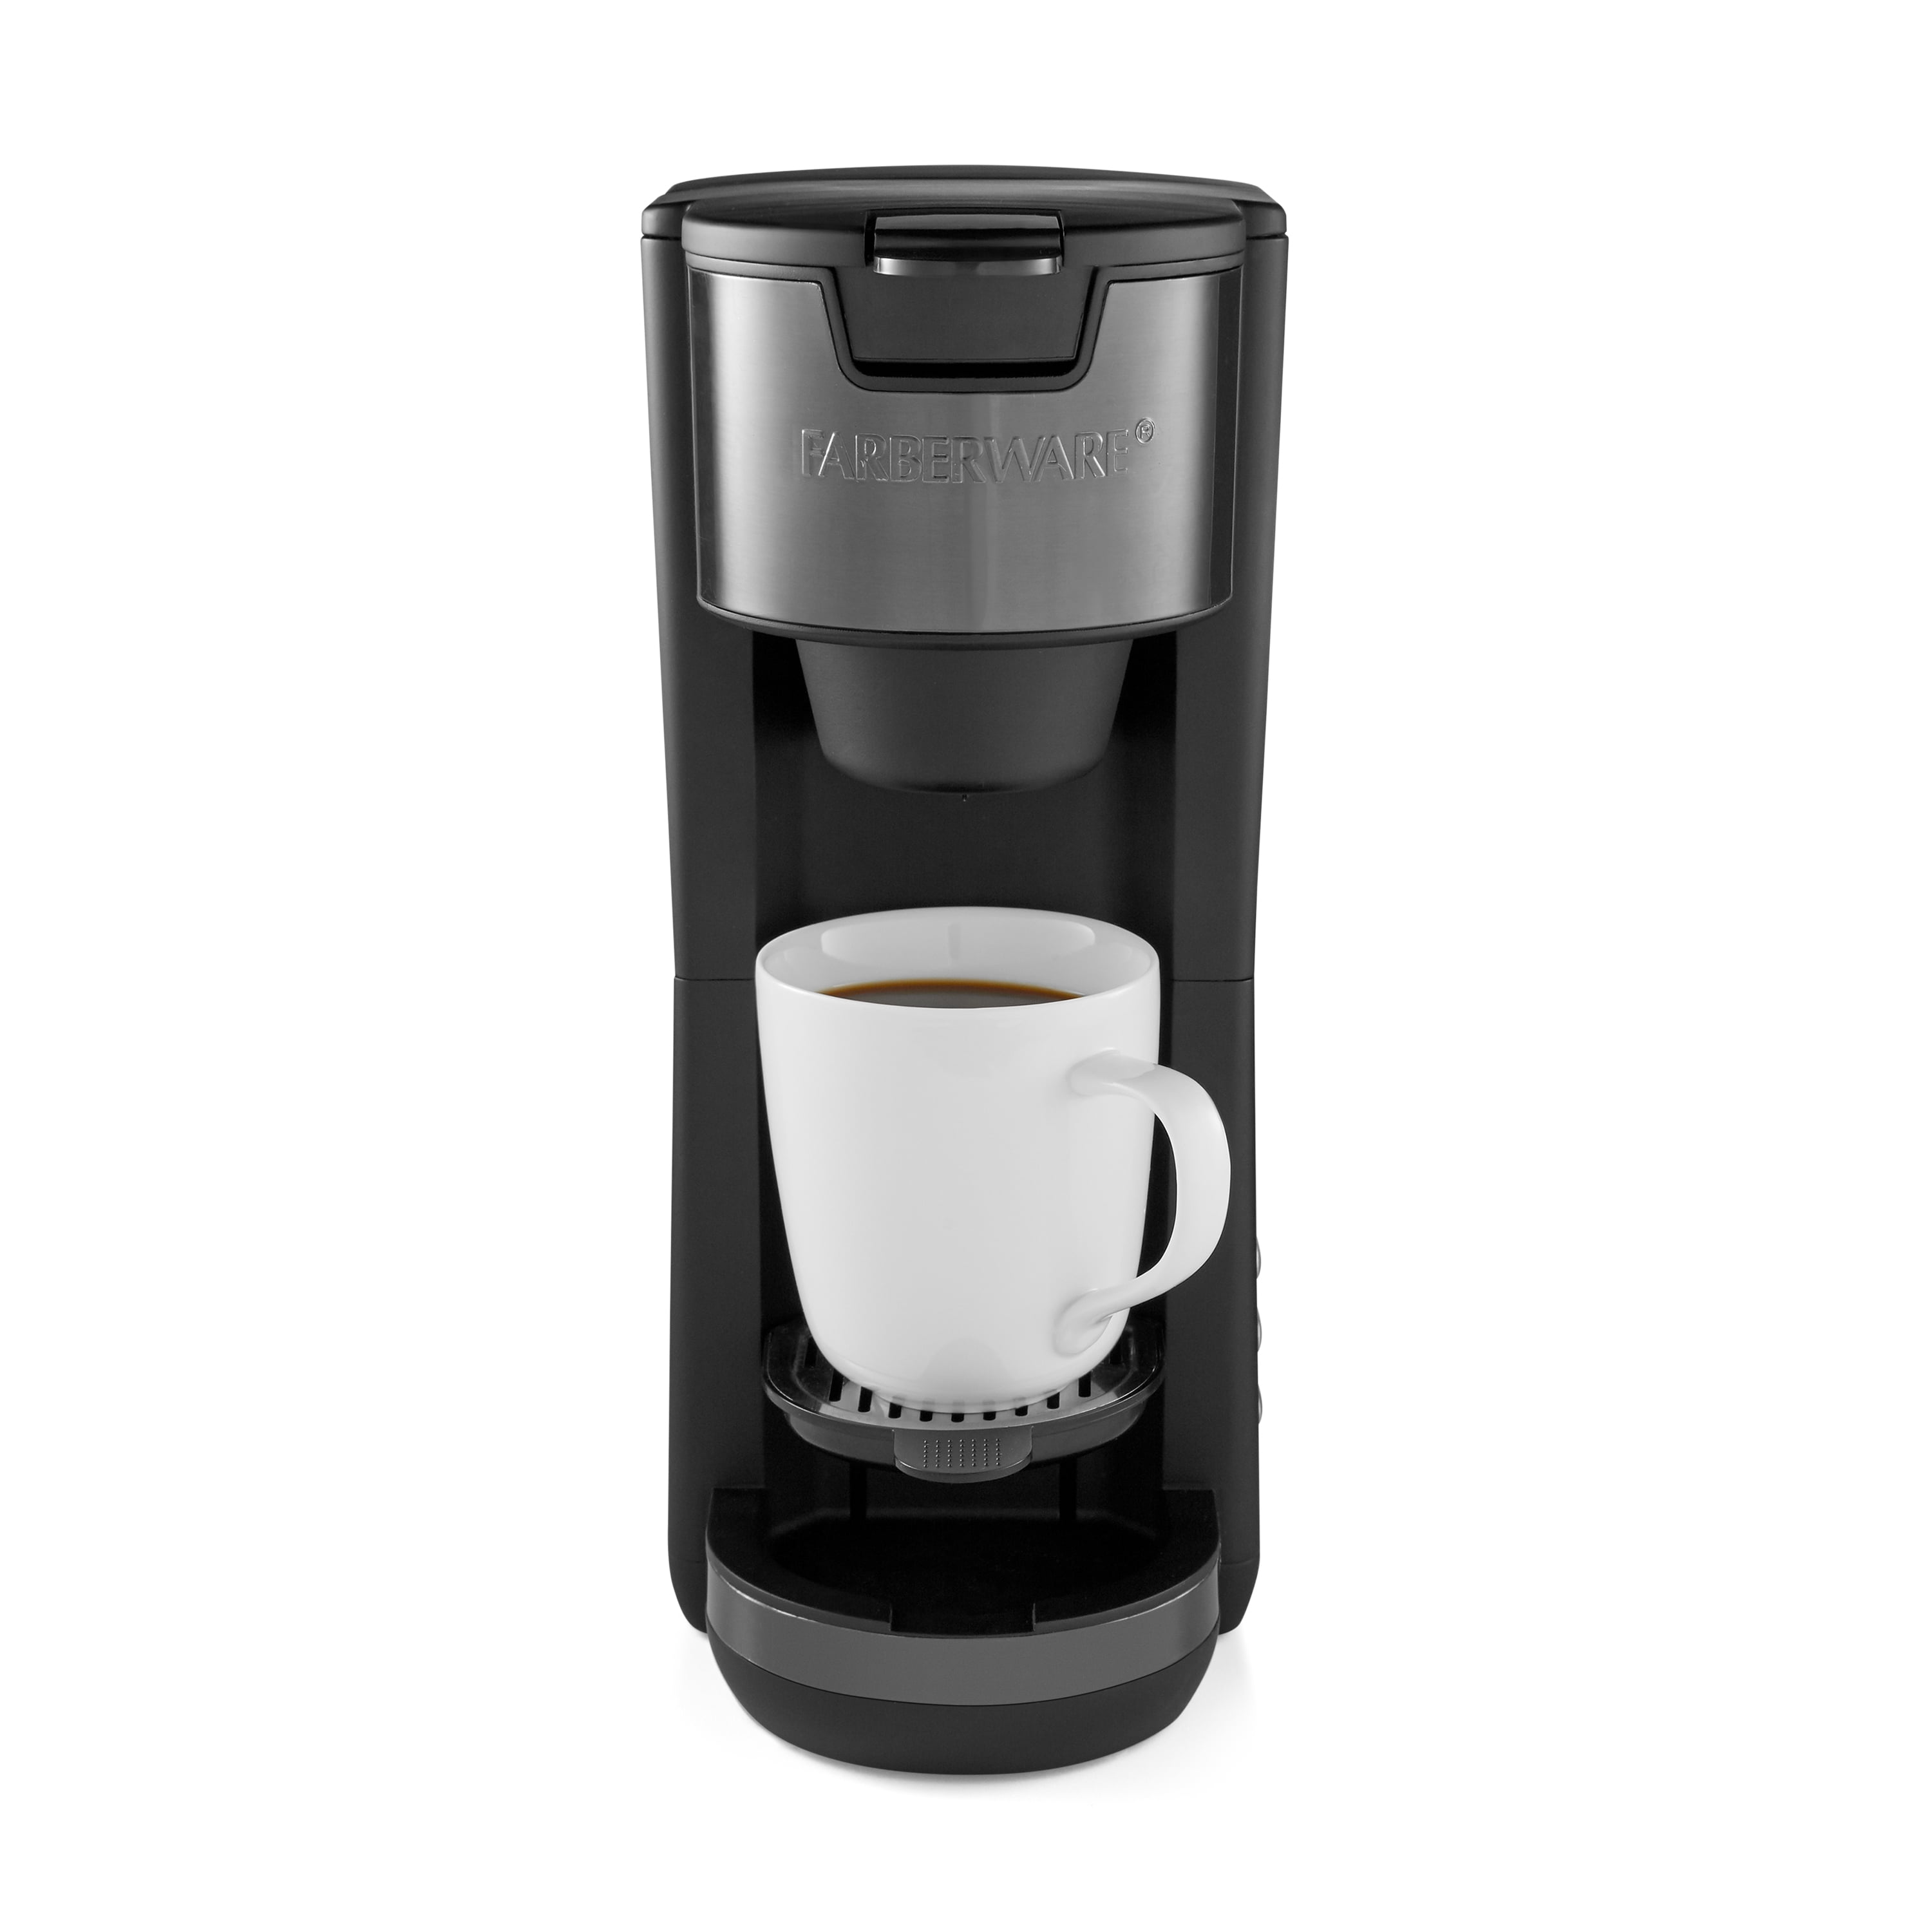 Farberware Single Serve Brewer Black Coffee Maker Model #201762 K-Cup Pod,  H 11